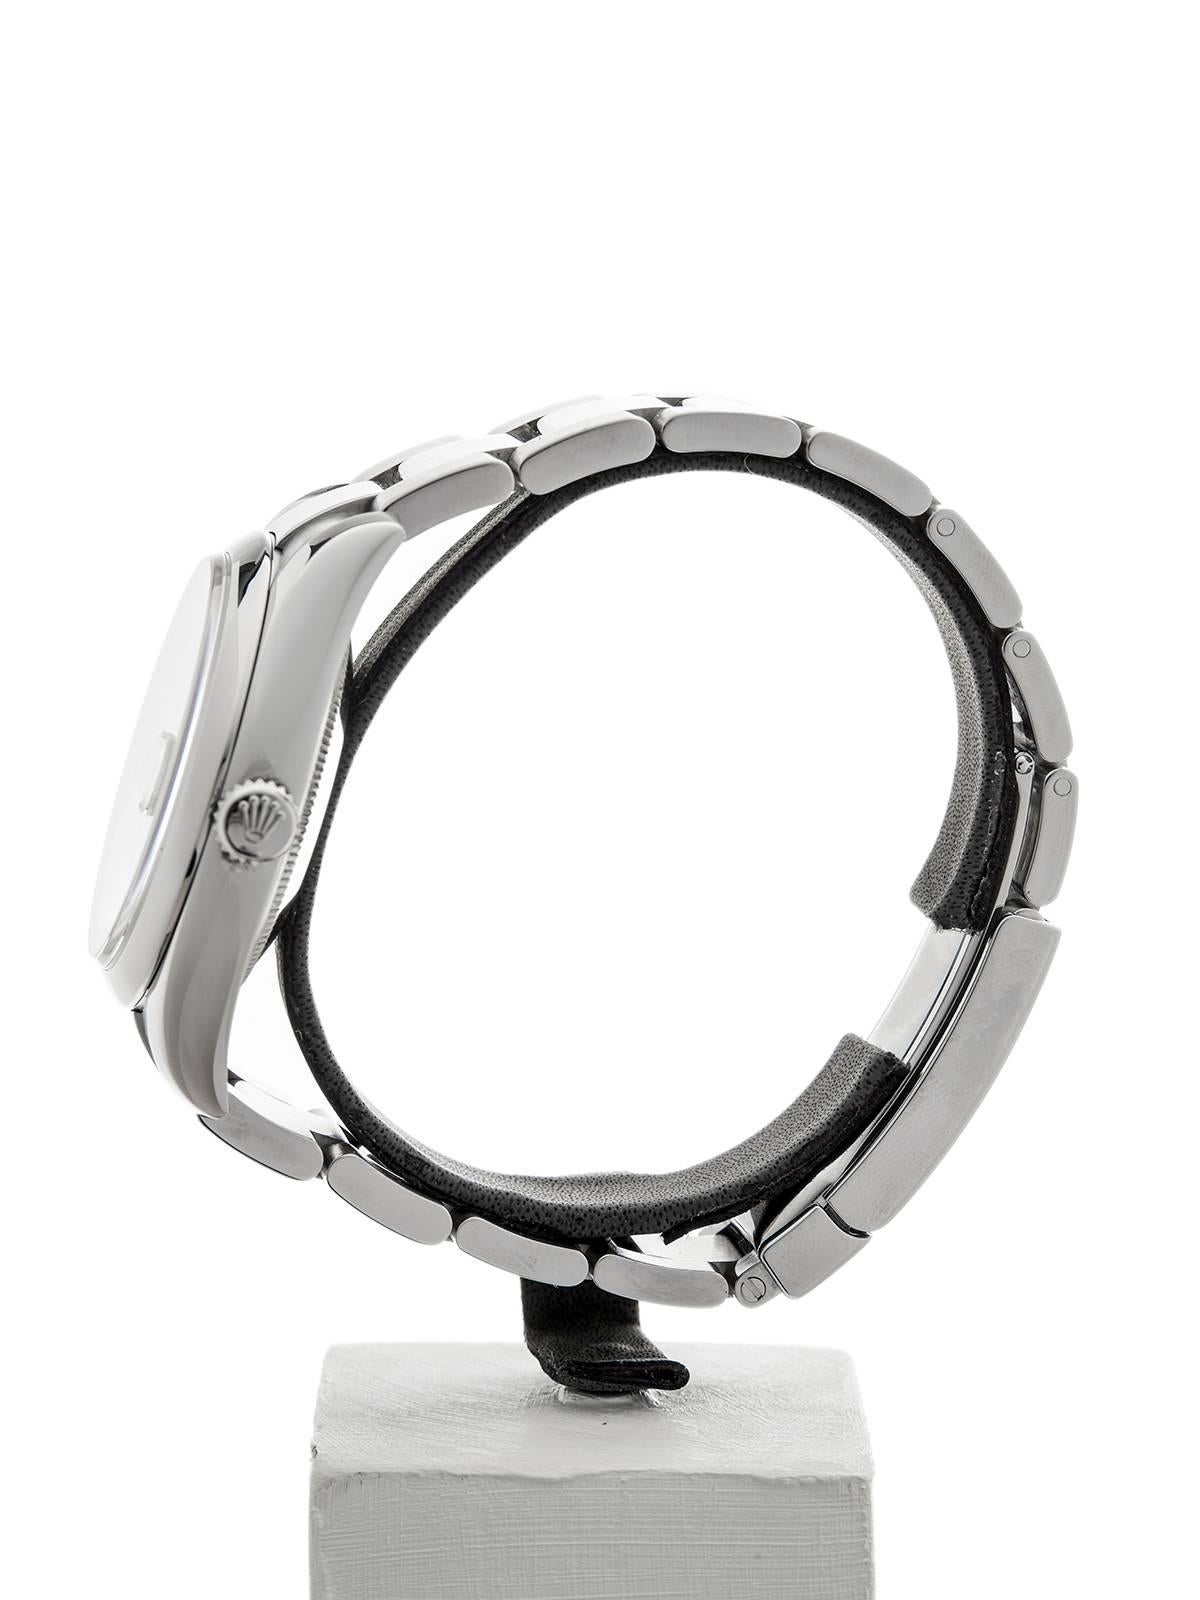 Rolex Stainless Steel Datejust Automatic Wristwatch Ref 116200, 2006 1